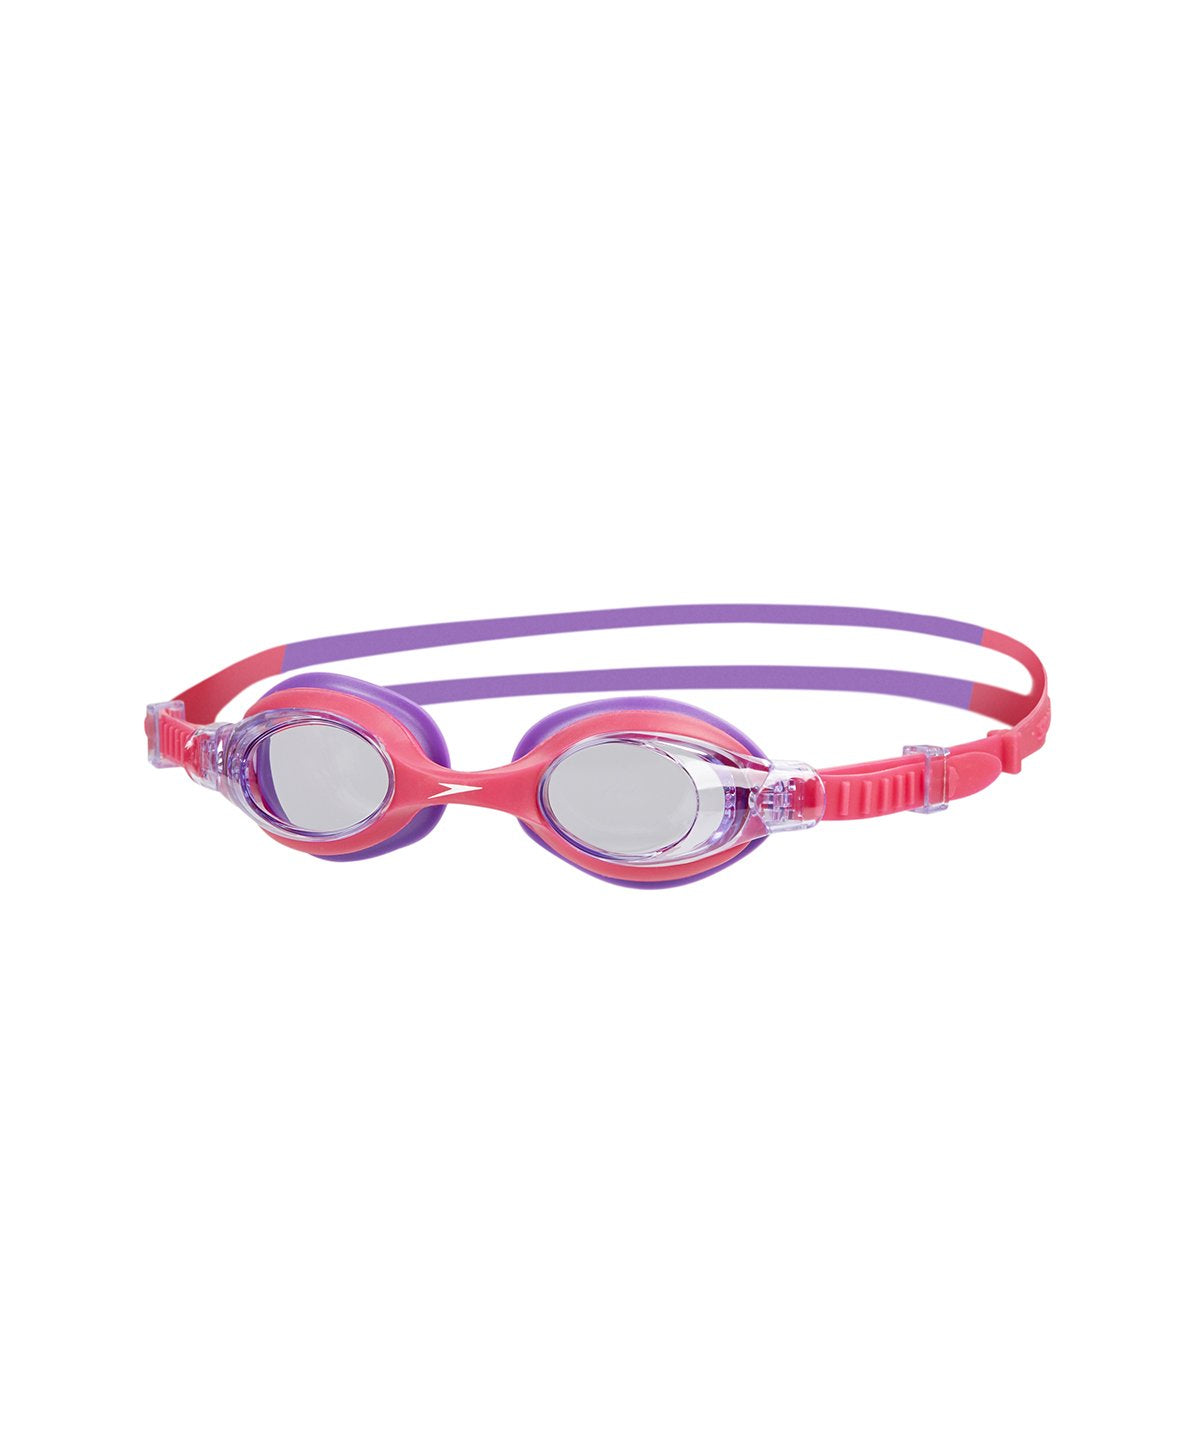 Speedo Tots Skoogle Flexifit Goggles (Assorted Color) - Best Price online Prokicksports.com